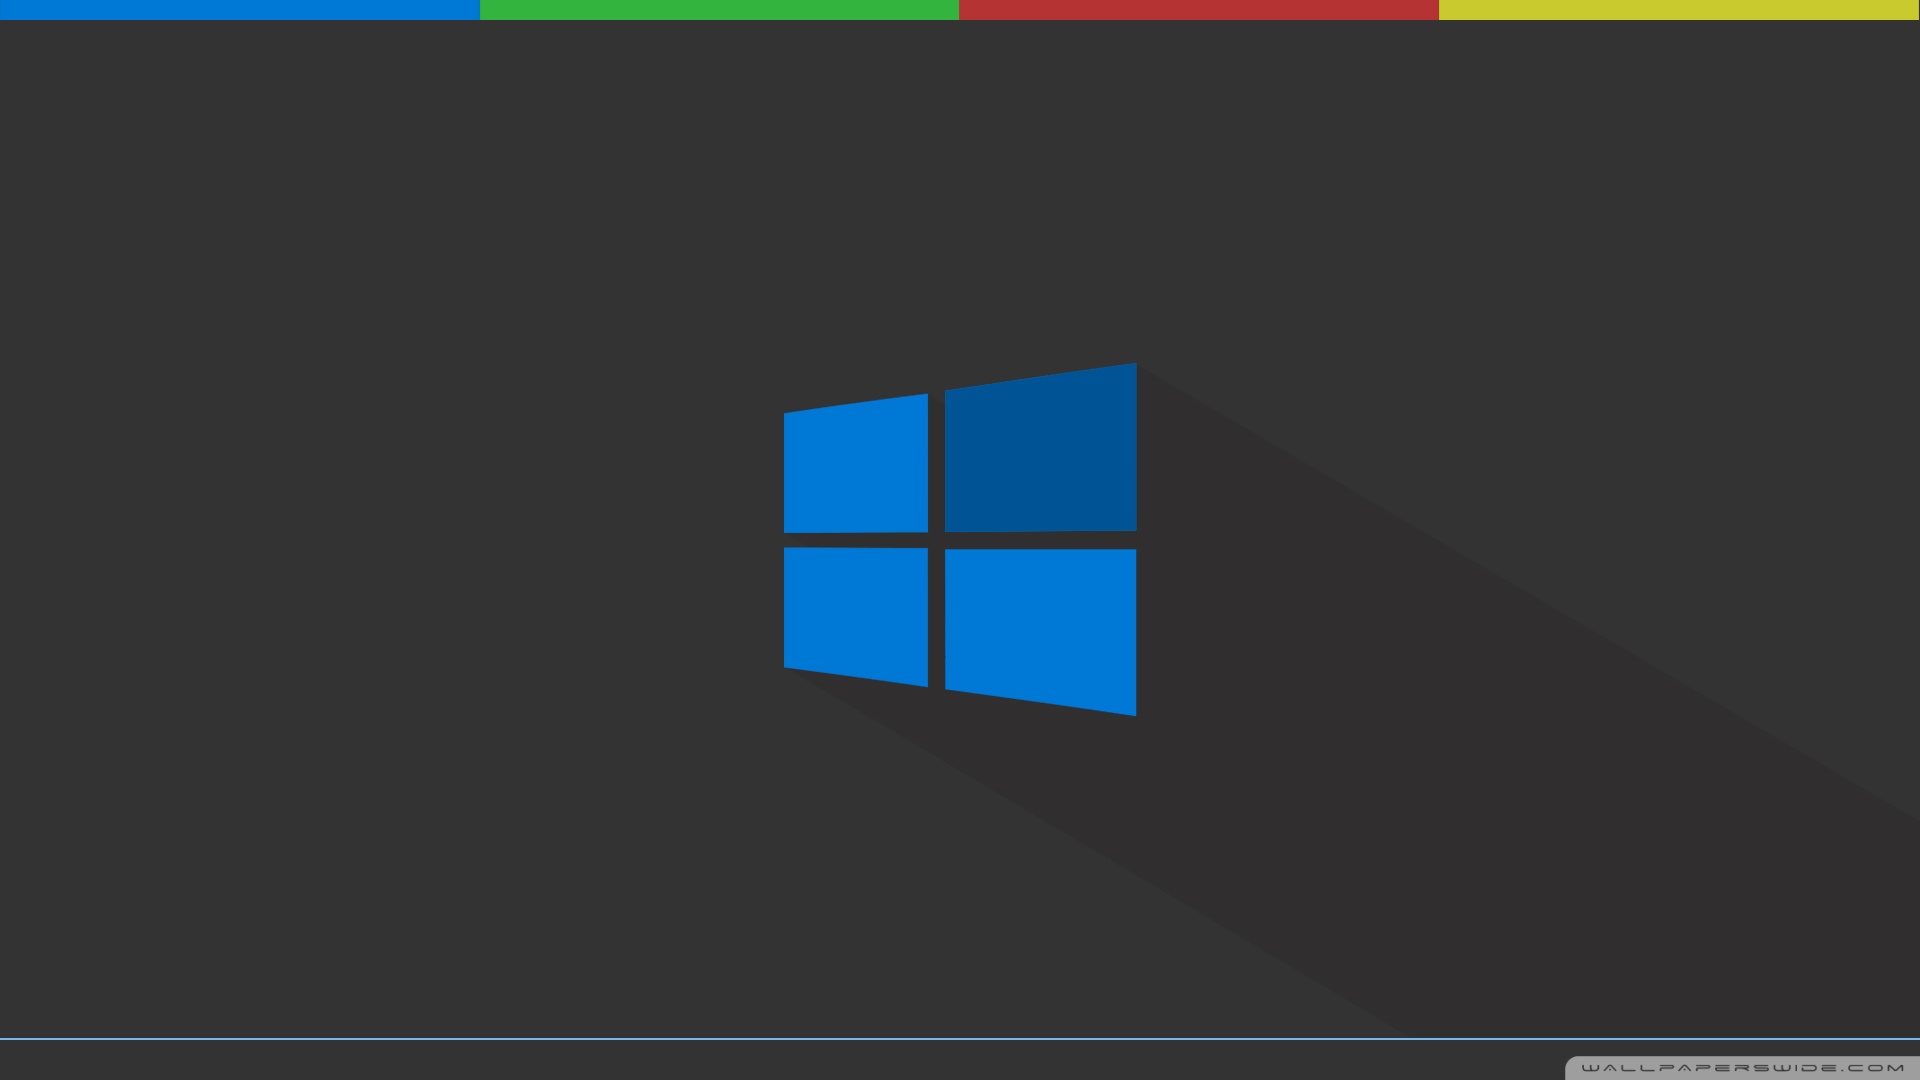 Windows 10 Material Design Wallpapers